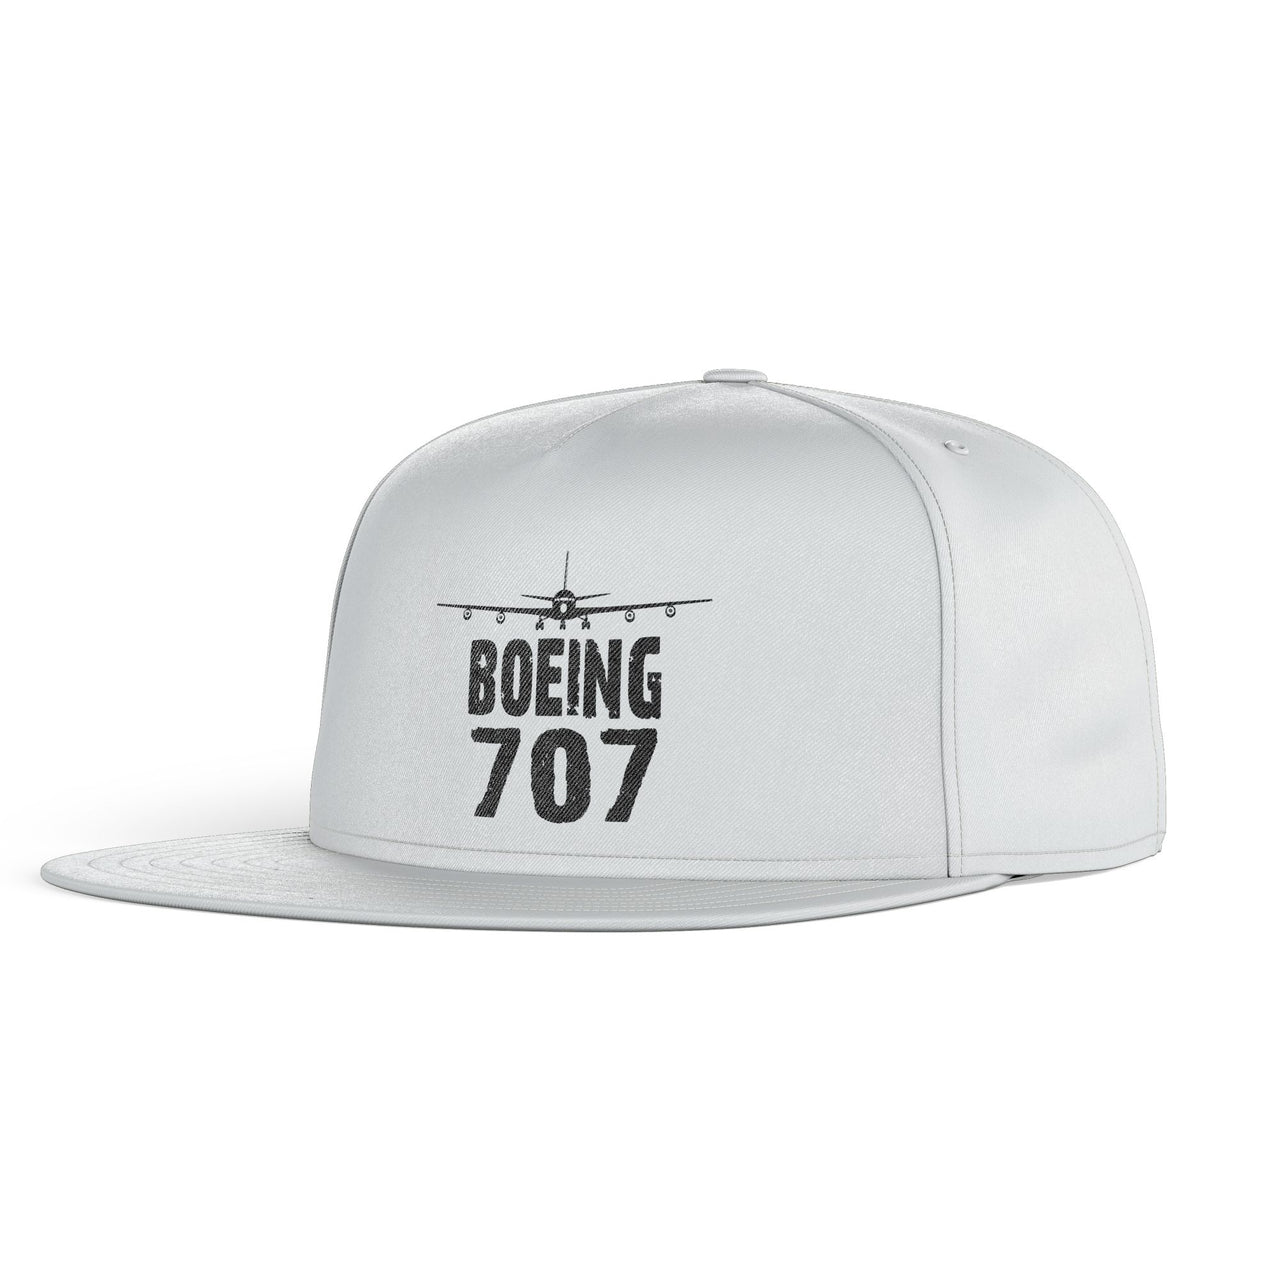 Boeing 707 & Plane Designed Snapback Caps & Hats